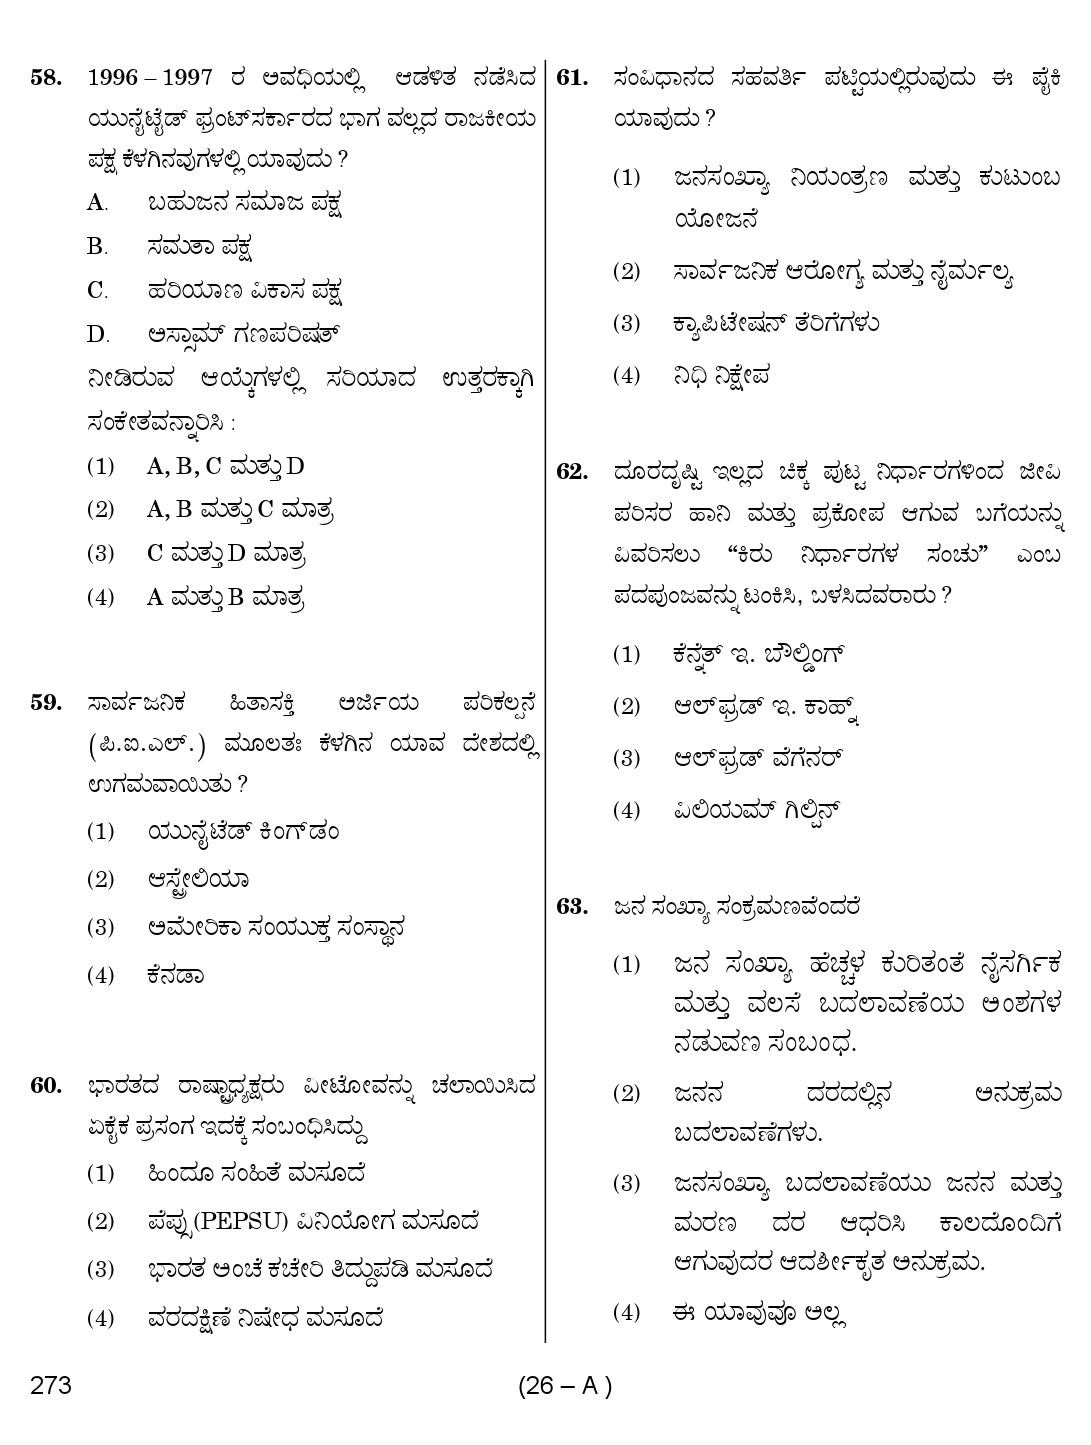 Karnataka PSC Social Science Teacher Exam Sample Question Paper Subject code 273 26